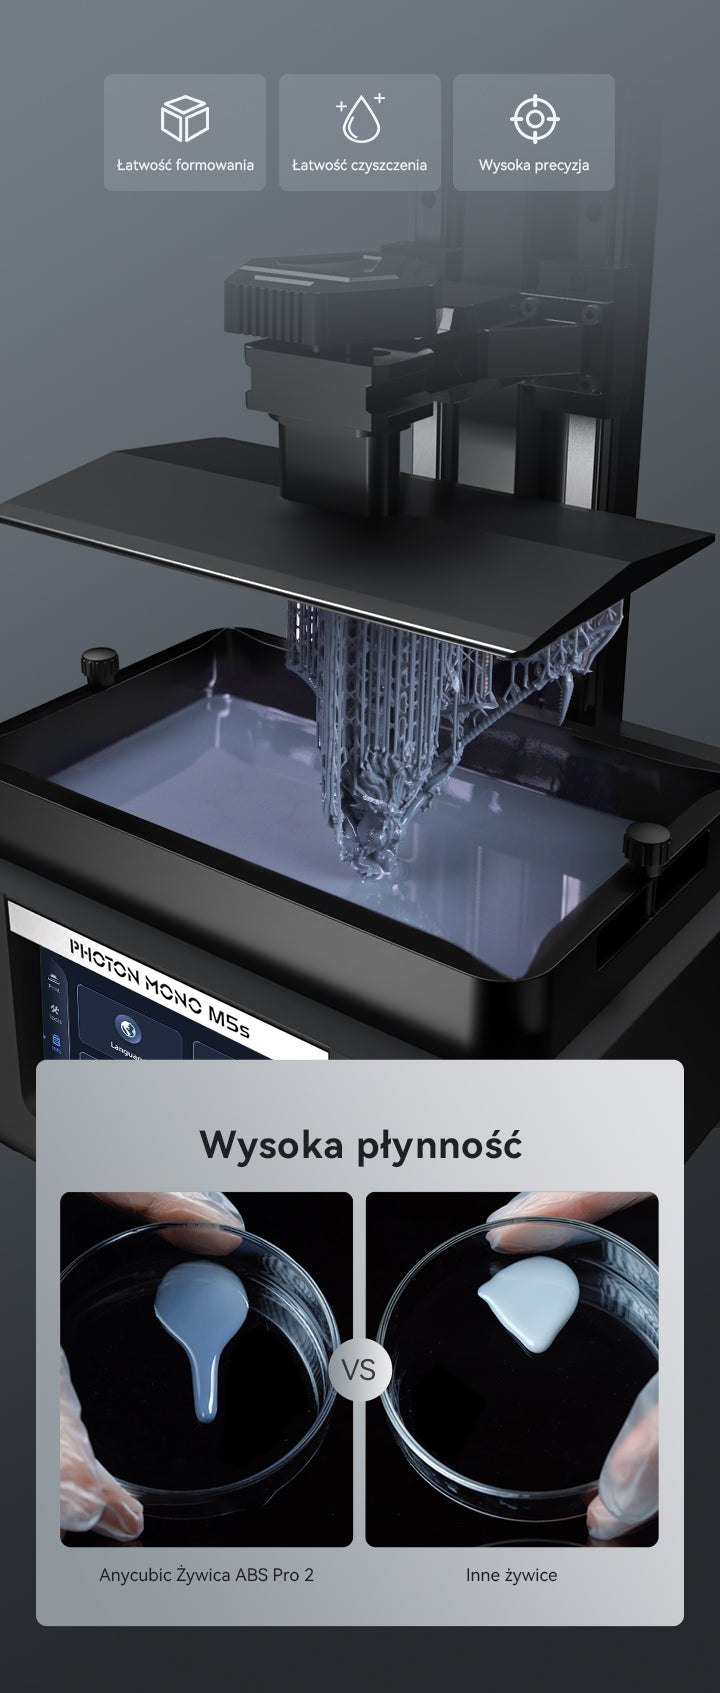 Anycubic Żywica ABS Pro 2 - High Flowability, High Success Rate